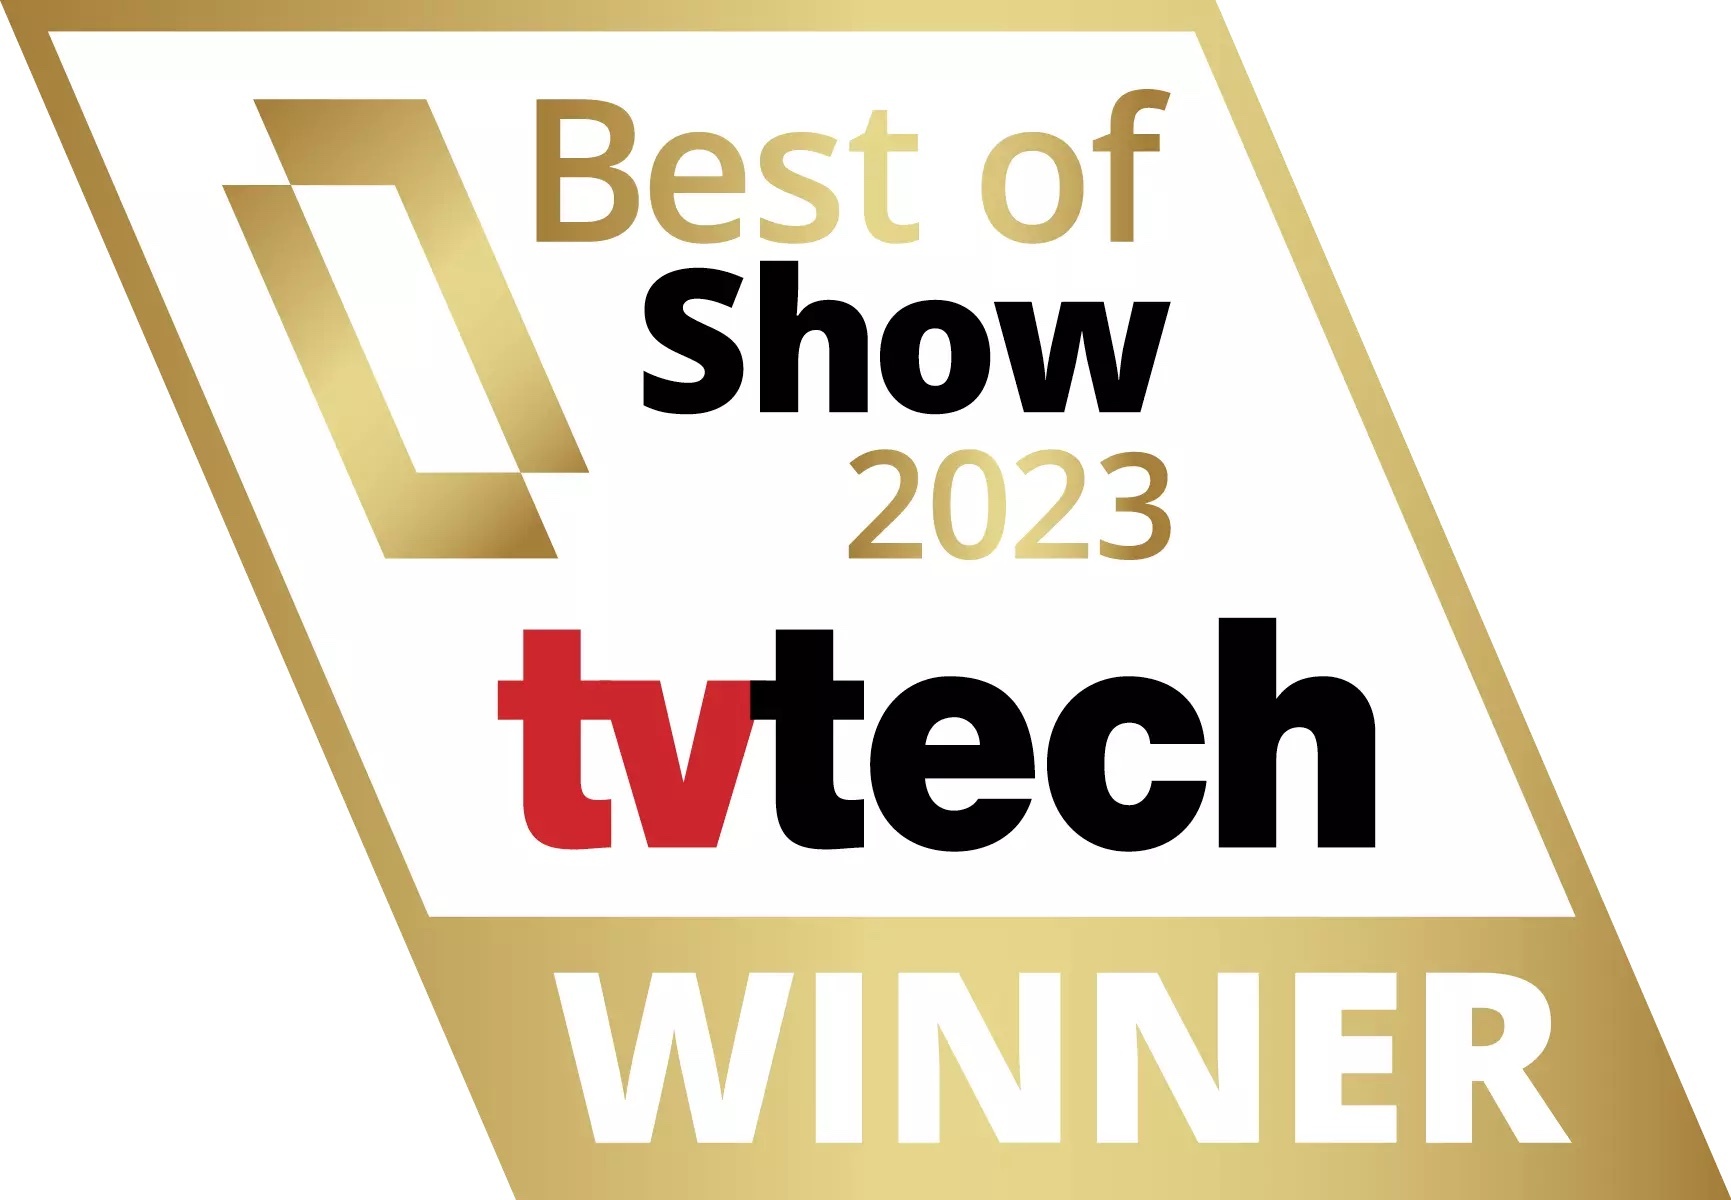 TB Tech Best of Show Media Platform